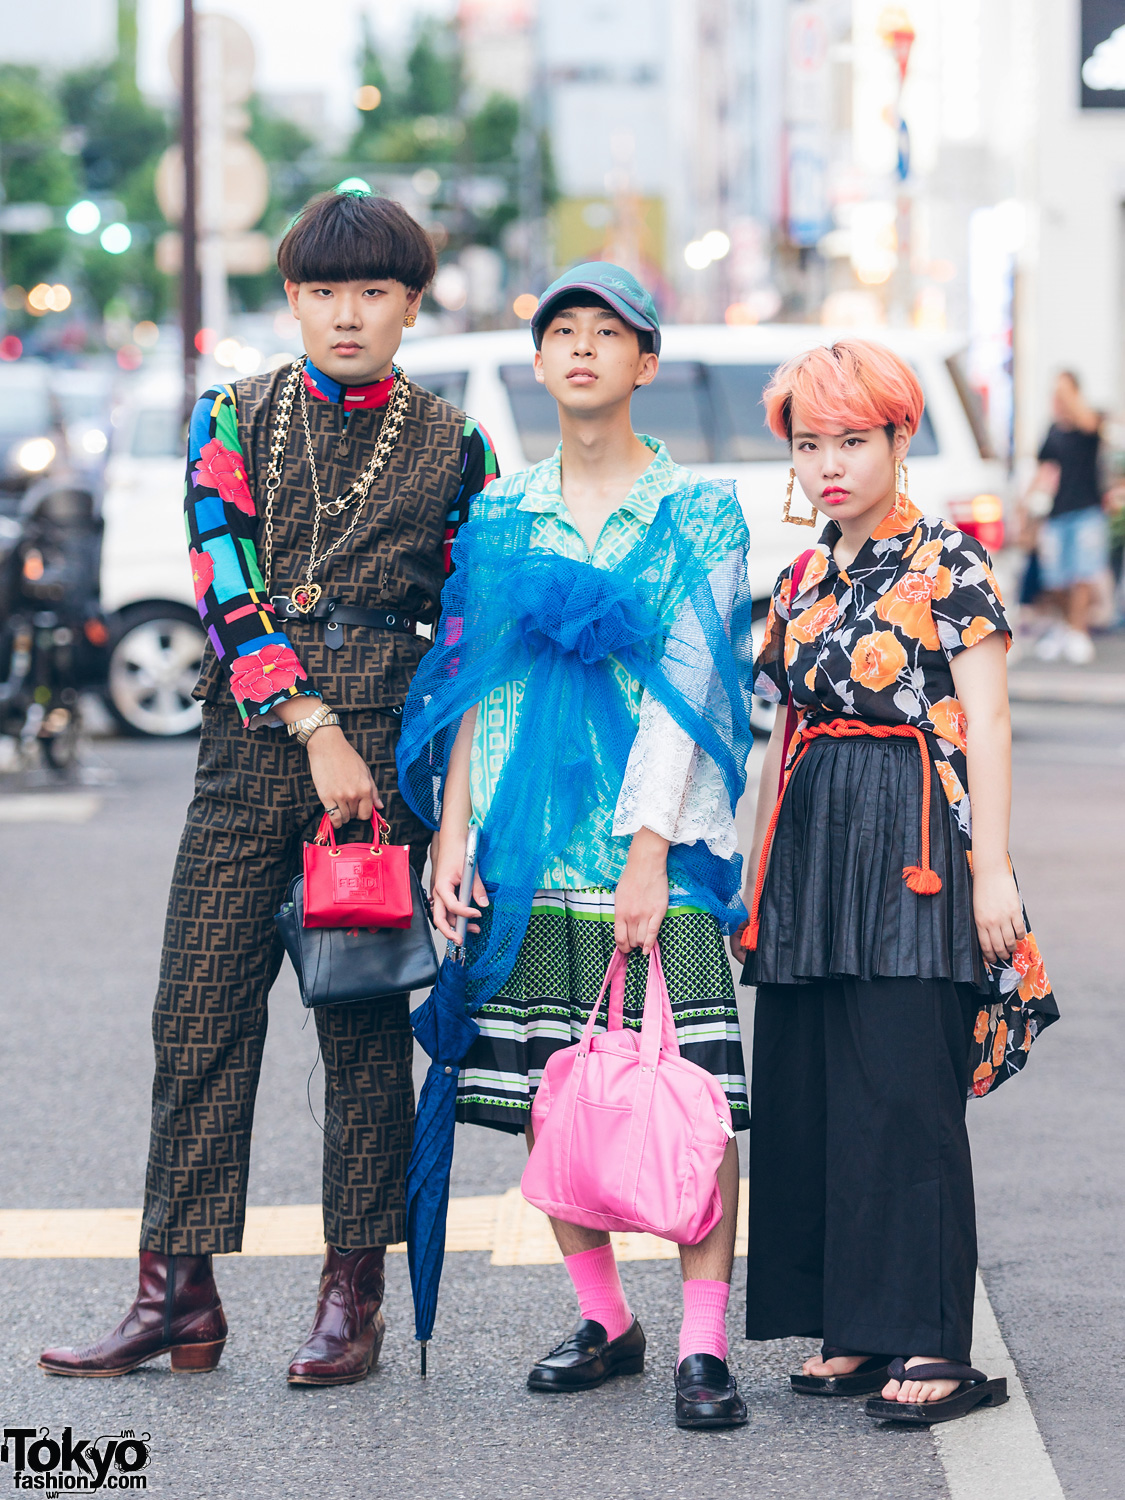 Vintage & Mixed Print Harajuku Street Styles w/ Pinnap, Fendi, Haruta, Kinji, Adidas, Chanel & YSL